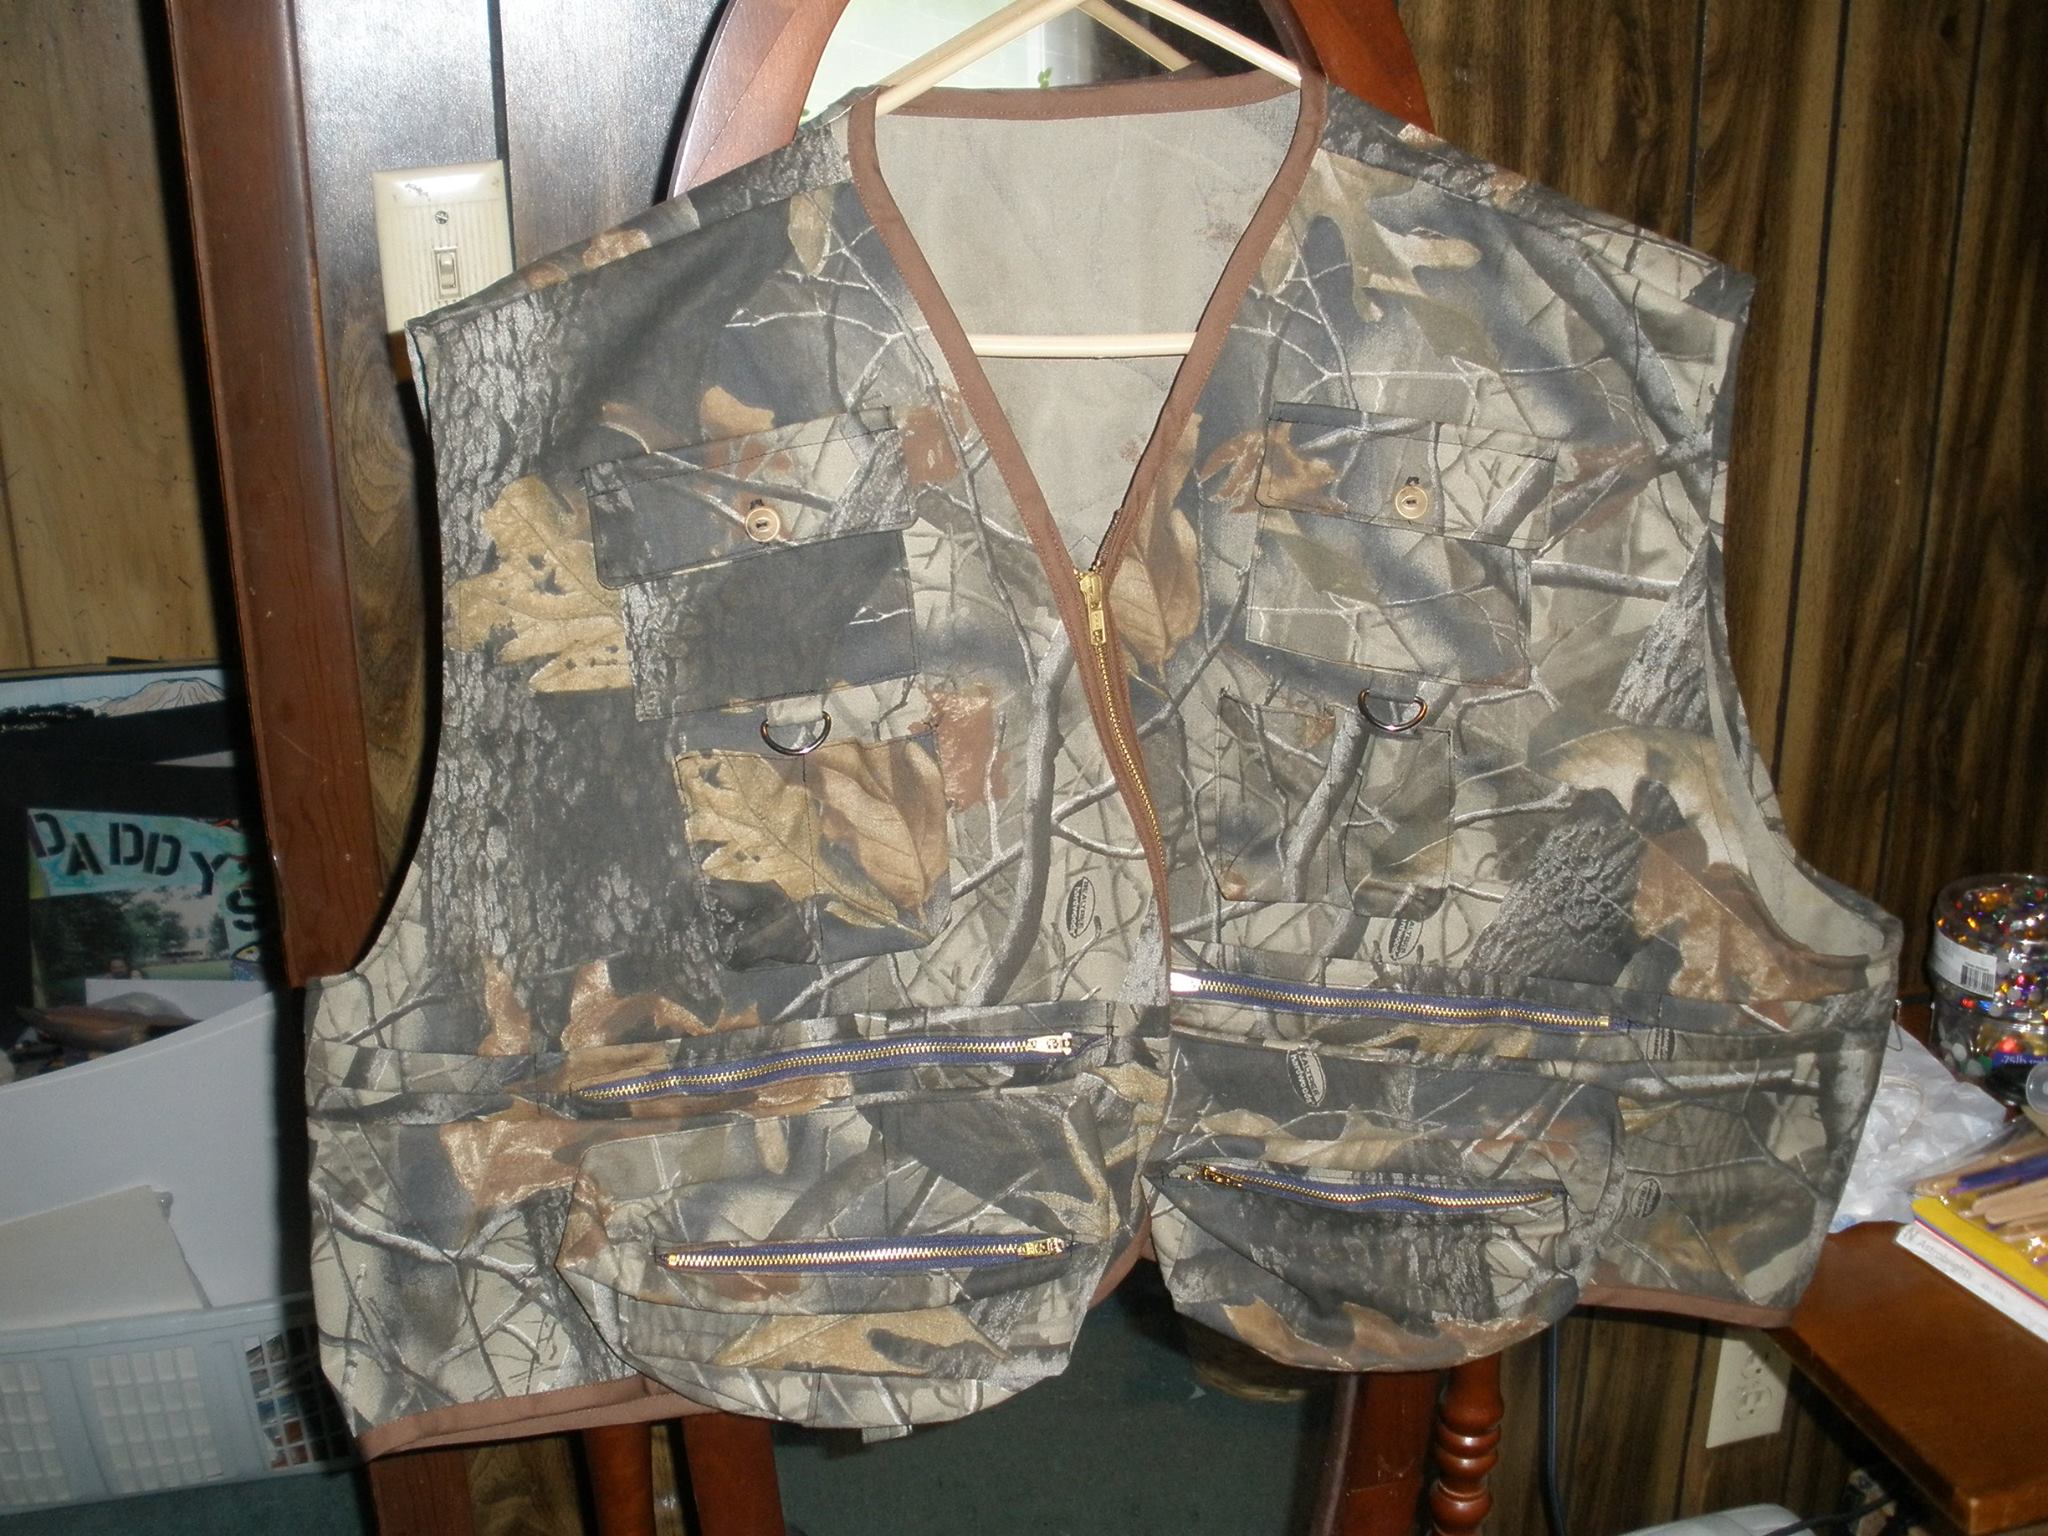 Diana's Custom Sewing 307 N Louise Ave, St James Missouri 65559